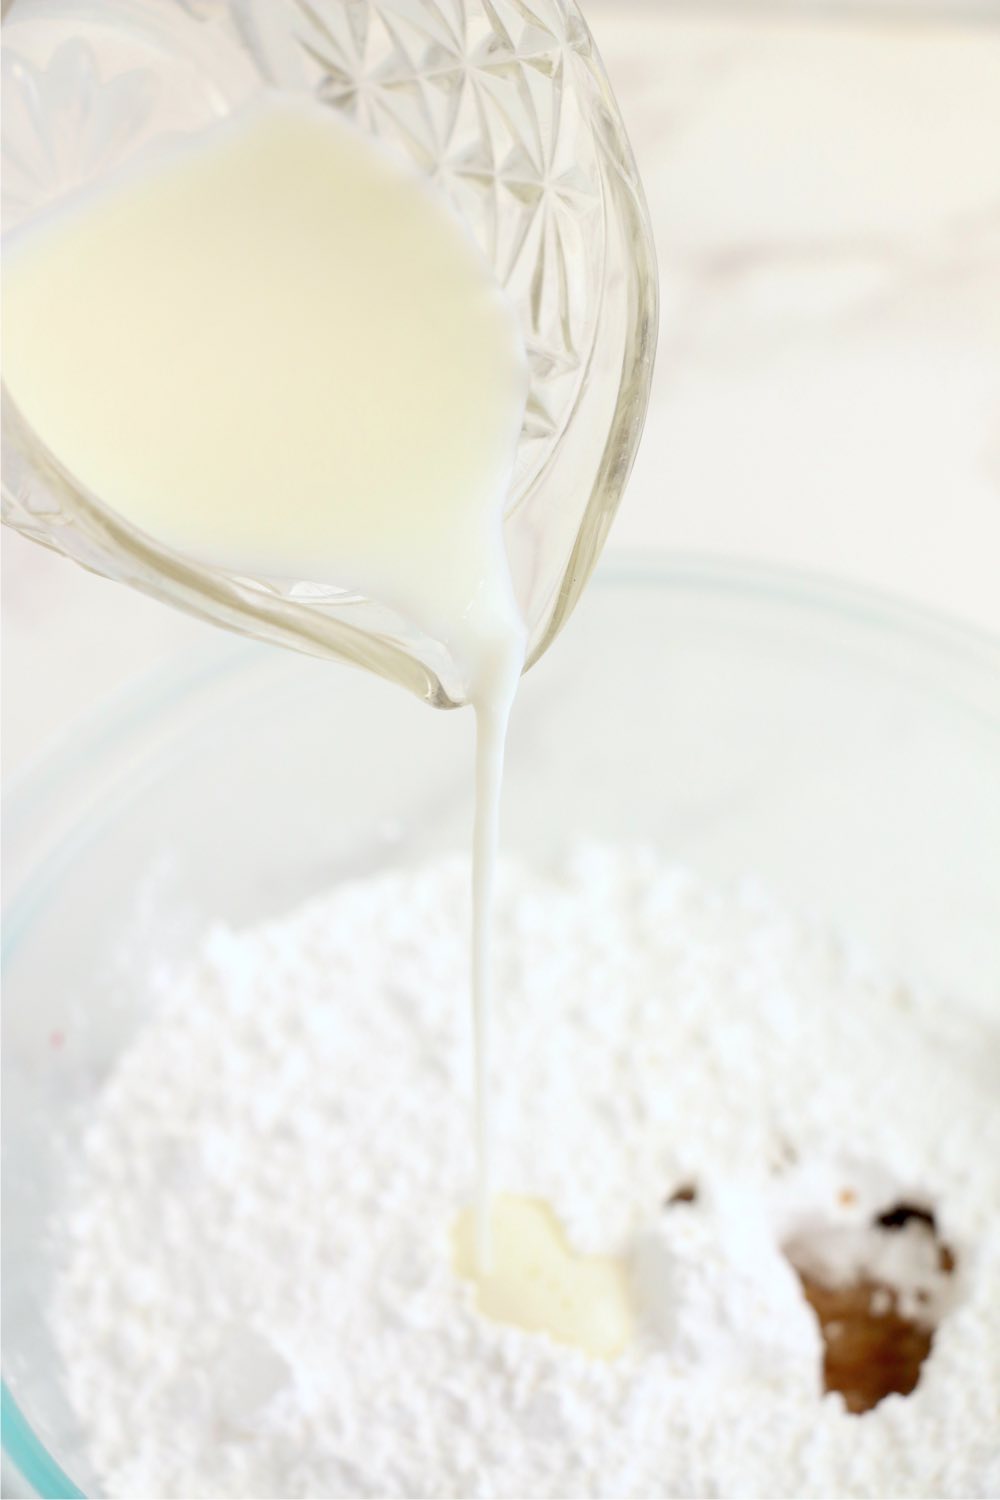 adding milk to powdered sugar and vanilla extract to make icing